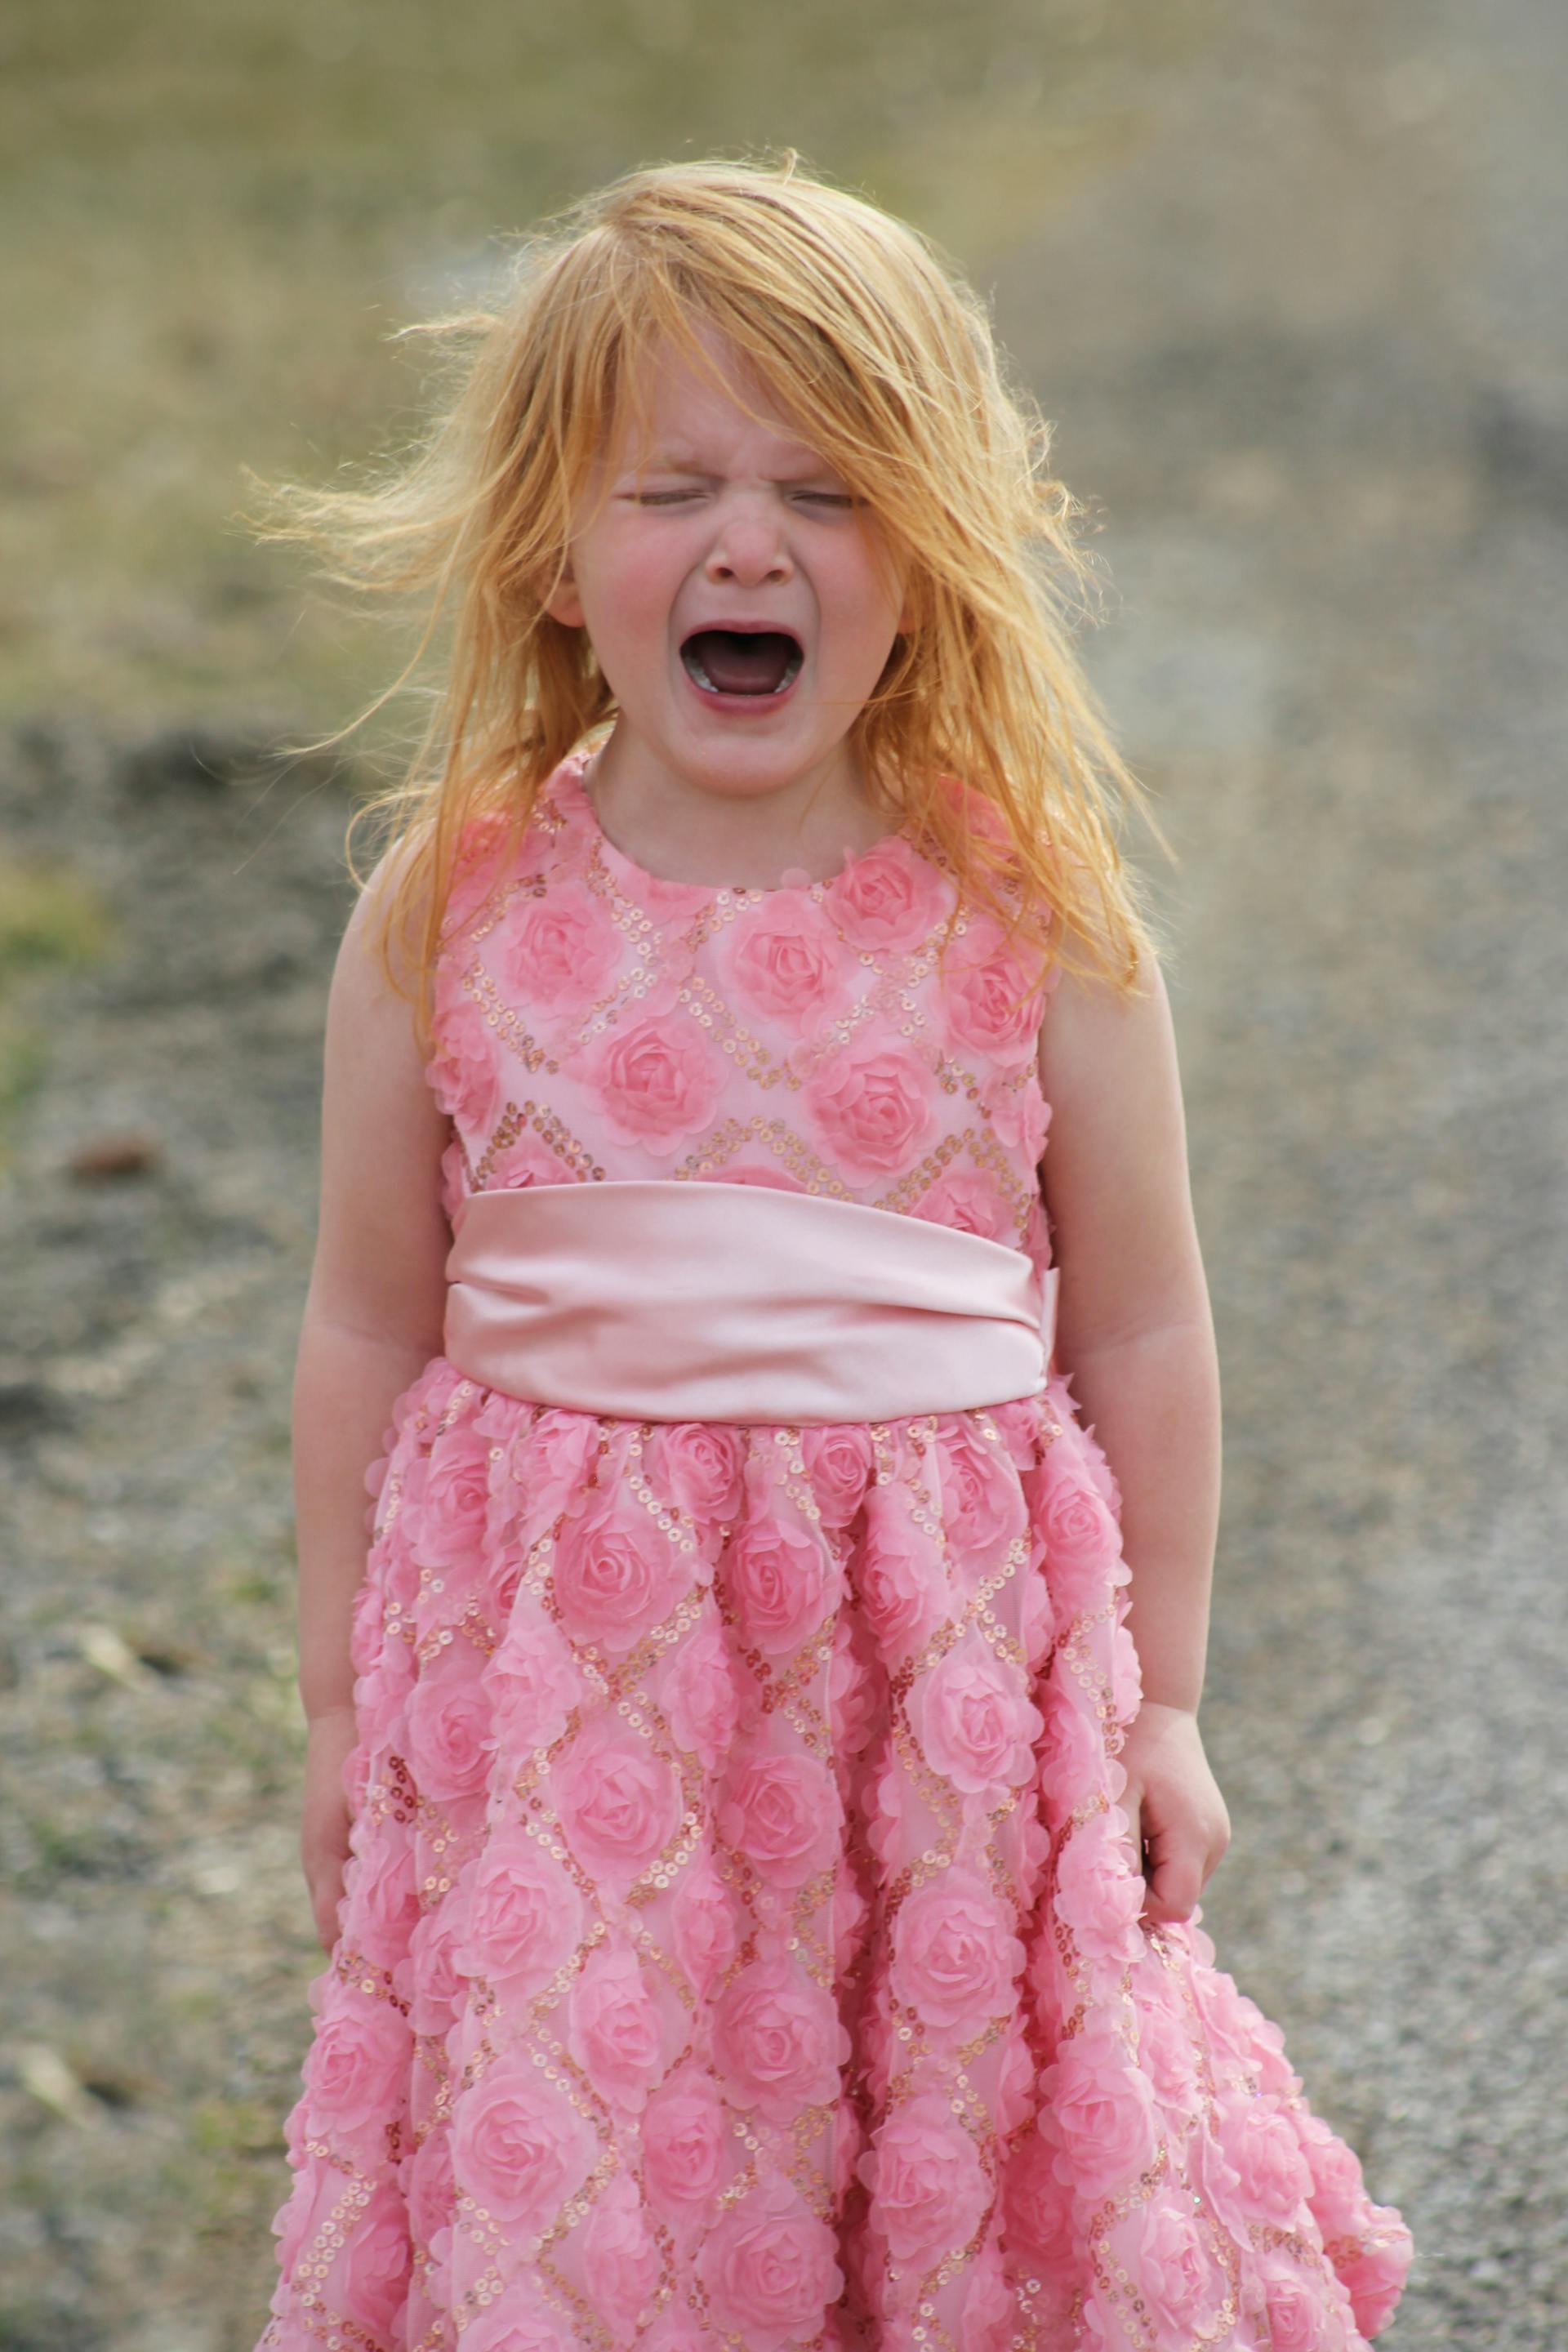 Une petite fille qui pleure | Source : Pexels